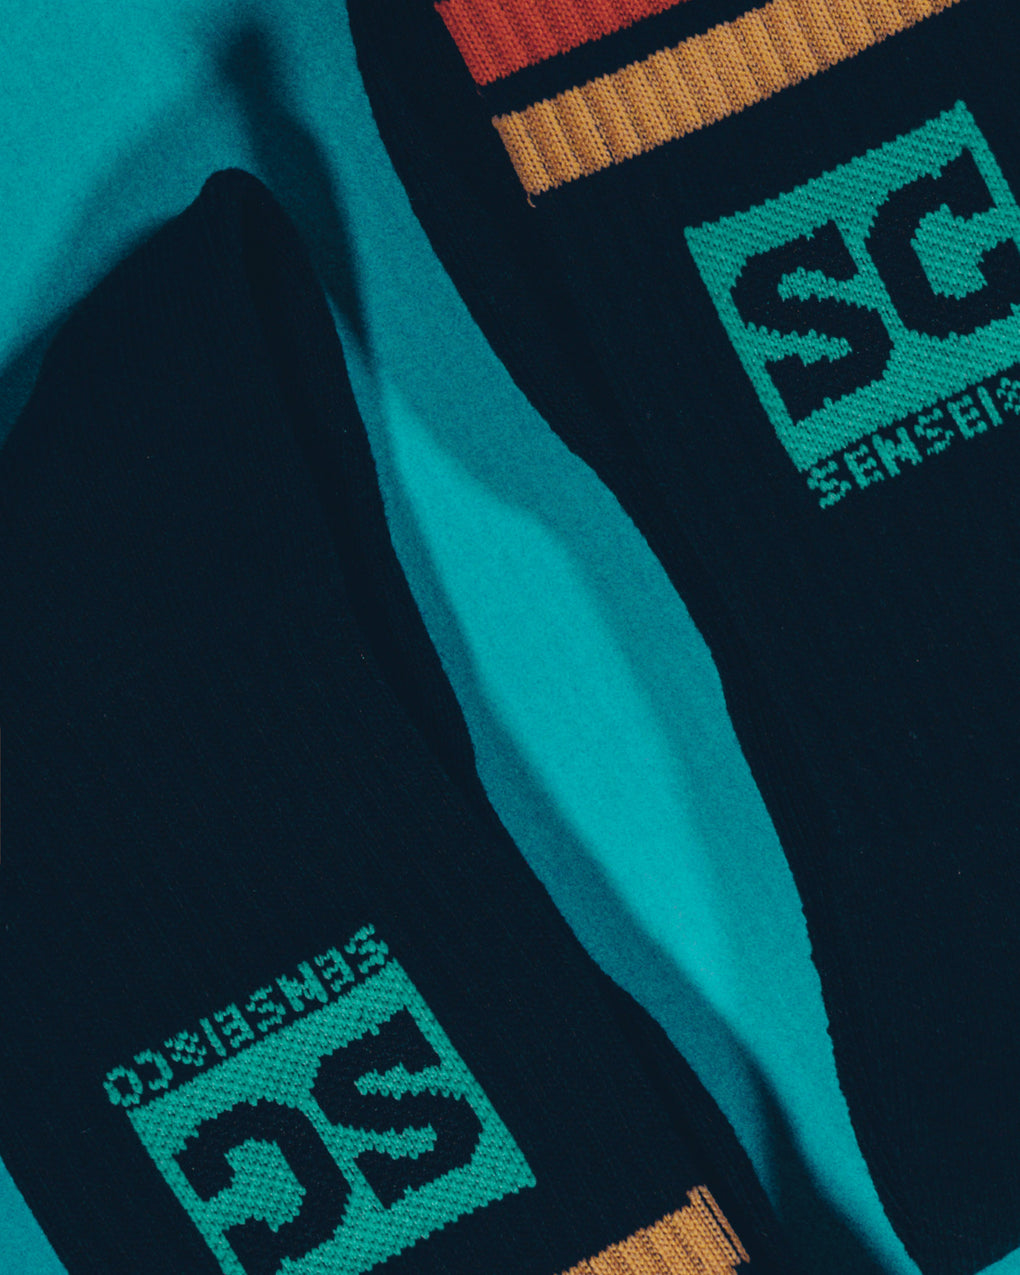 Sensei & Co. Fiesta Socks - Hybrid Crew Cut